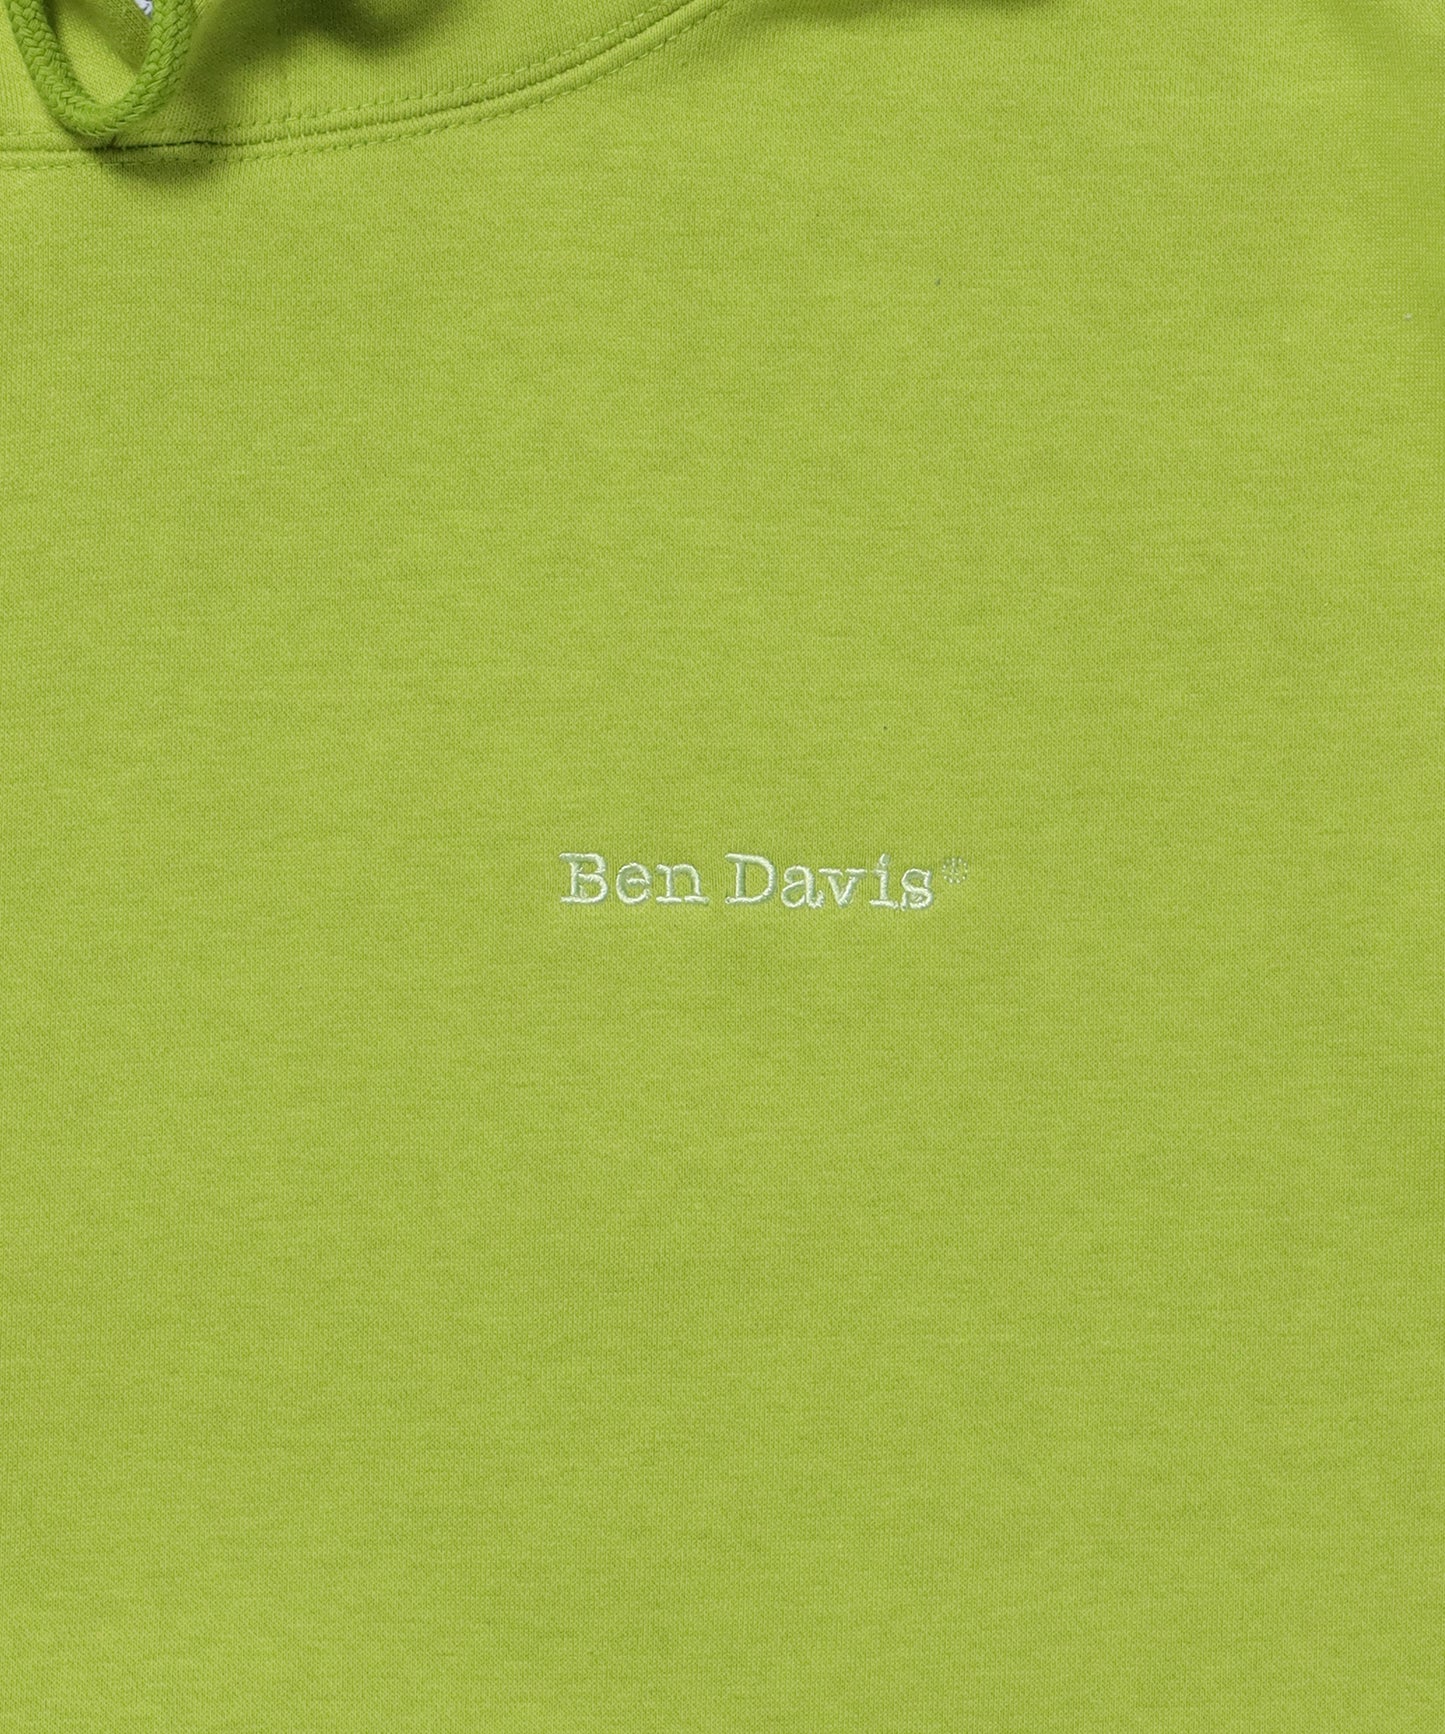 【BEN DAVIS(ベンデイビス)】 HEAVY SWEAT HOODIE NVL / ビッグ スウェット ヘビーウェイト 限定 パーカー グリーン